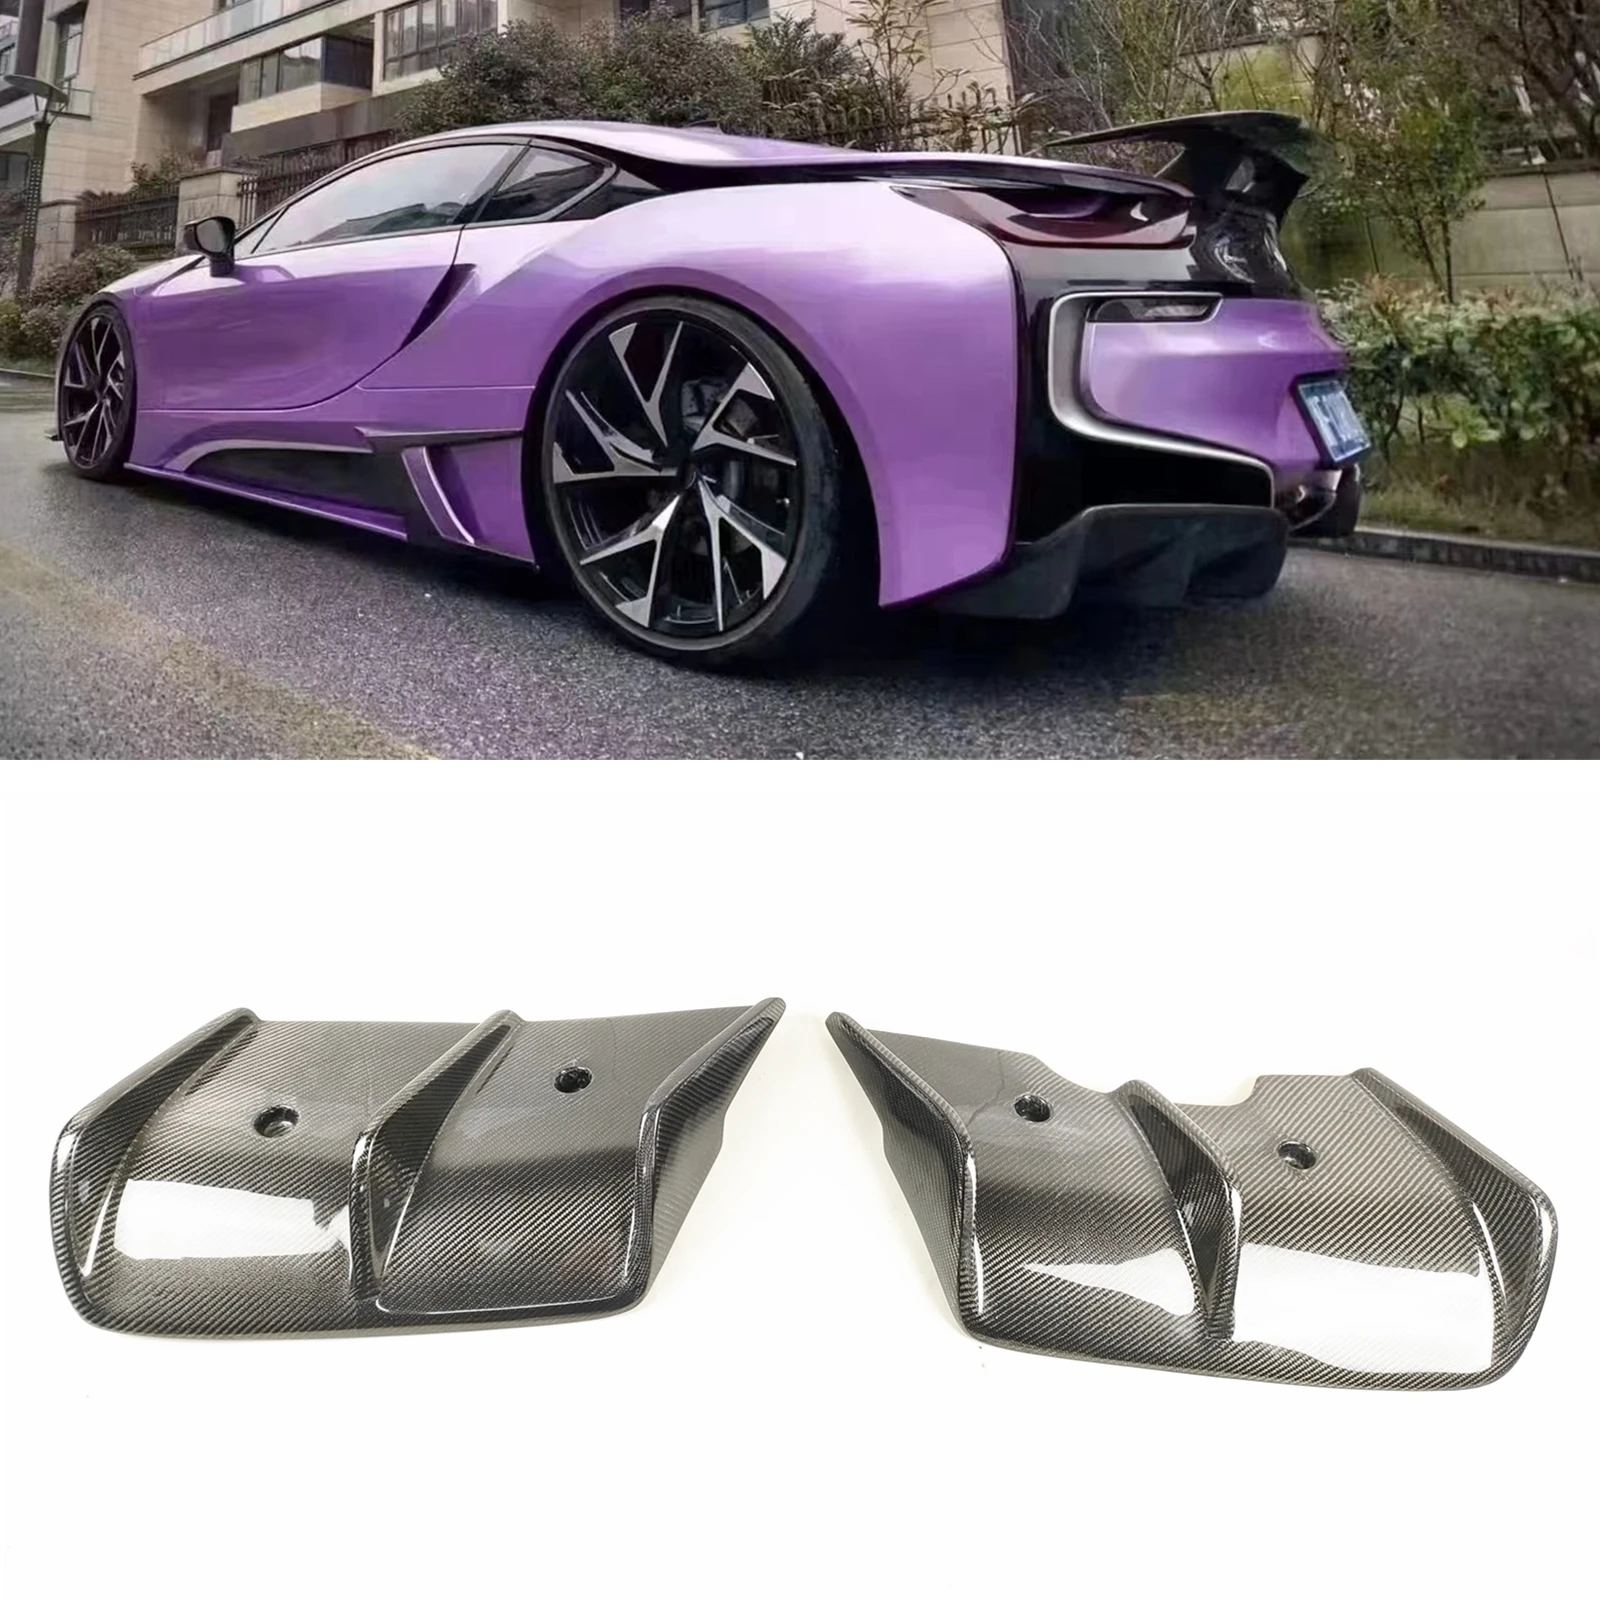 

2pcs Rear Bumper Diffuser Side Splitter Cover For BMW i8 2014-2020 2-Door Real Carbon Fiber Car Boot Lower Guard Plate Spoiler